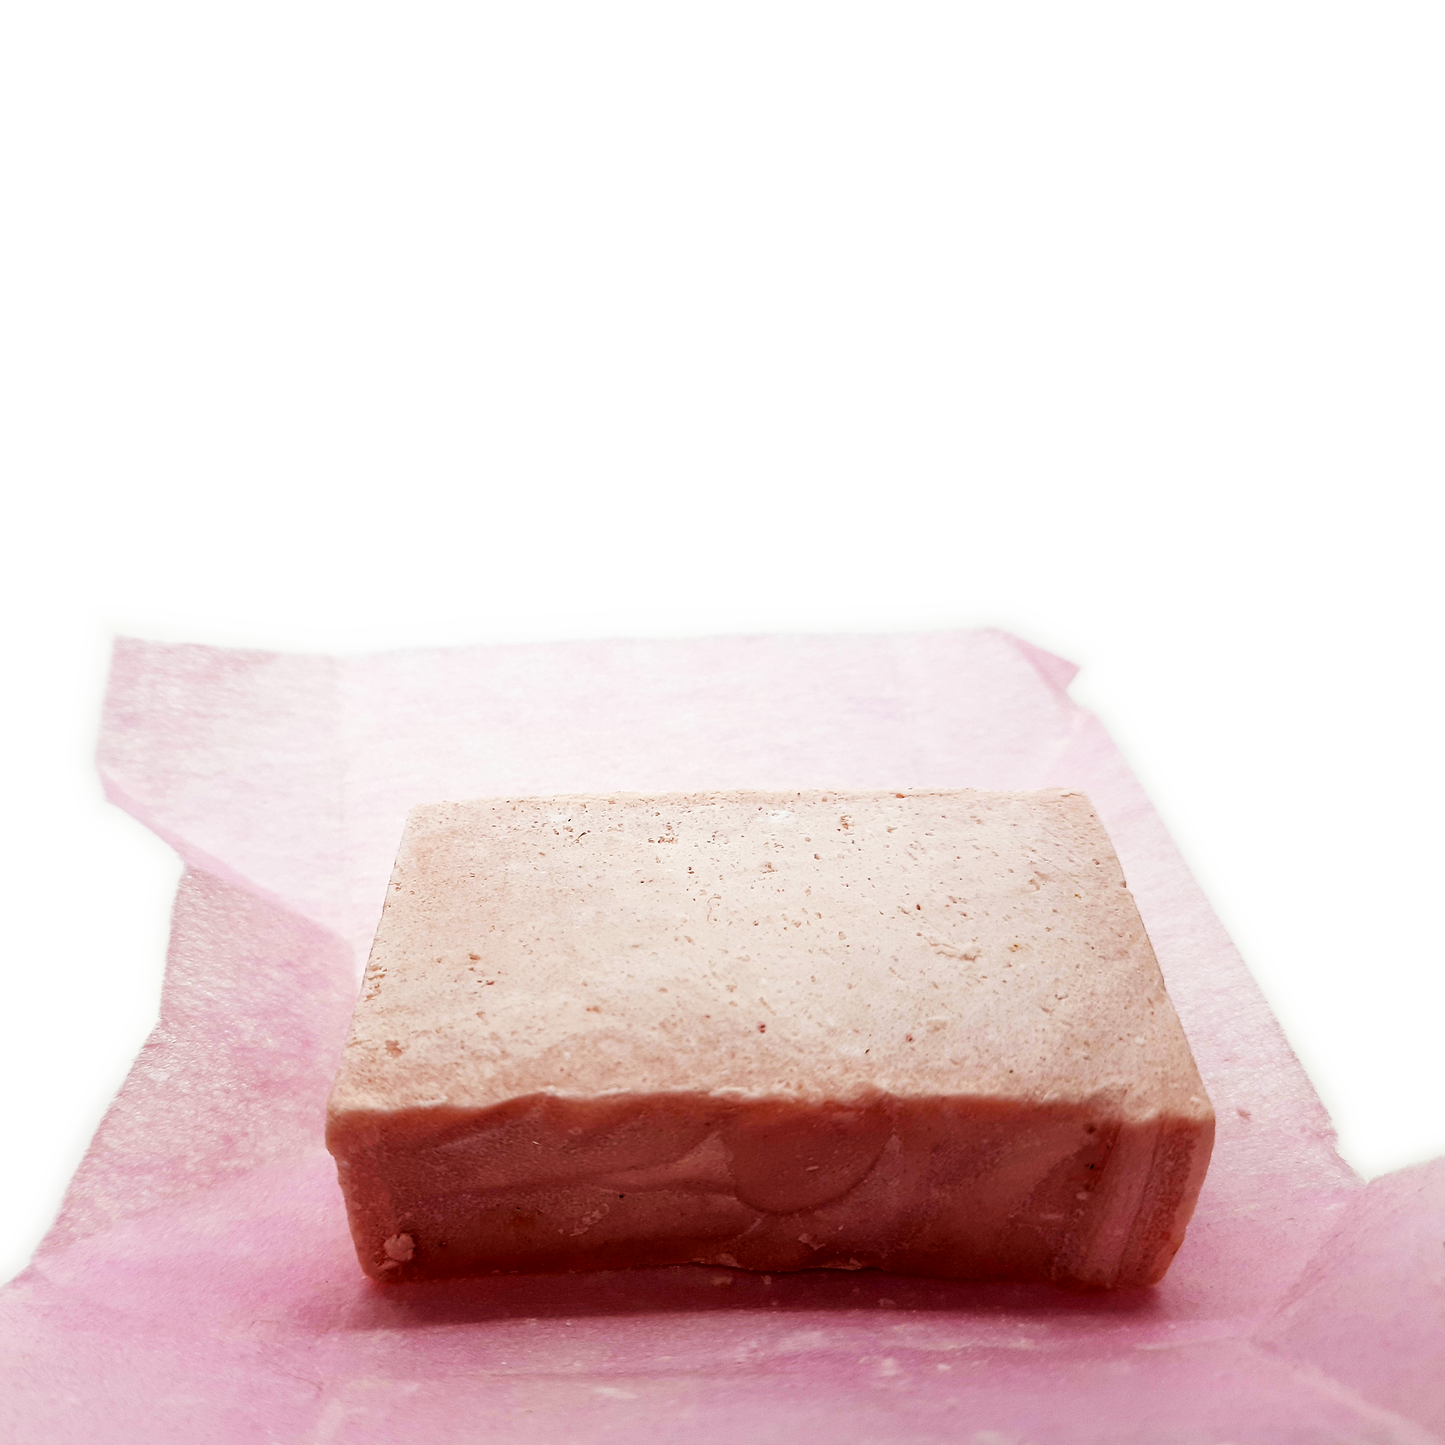 Pink Salt Soap Bar